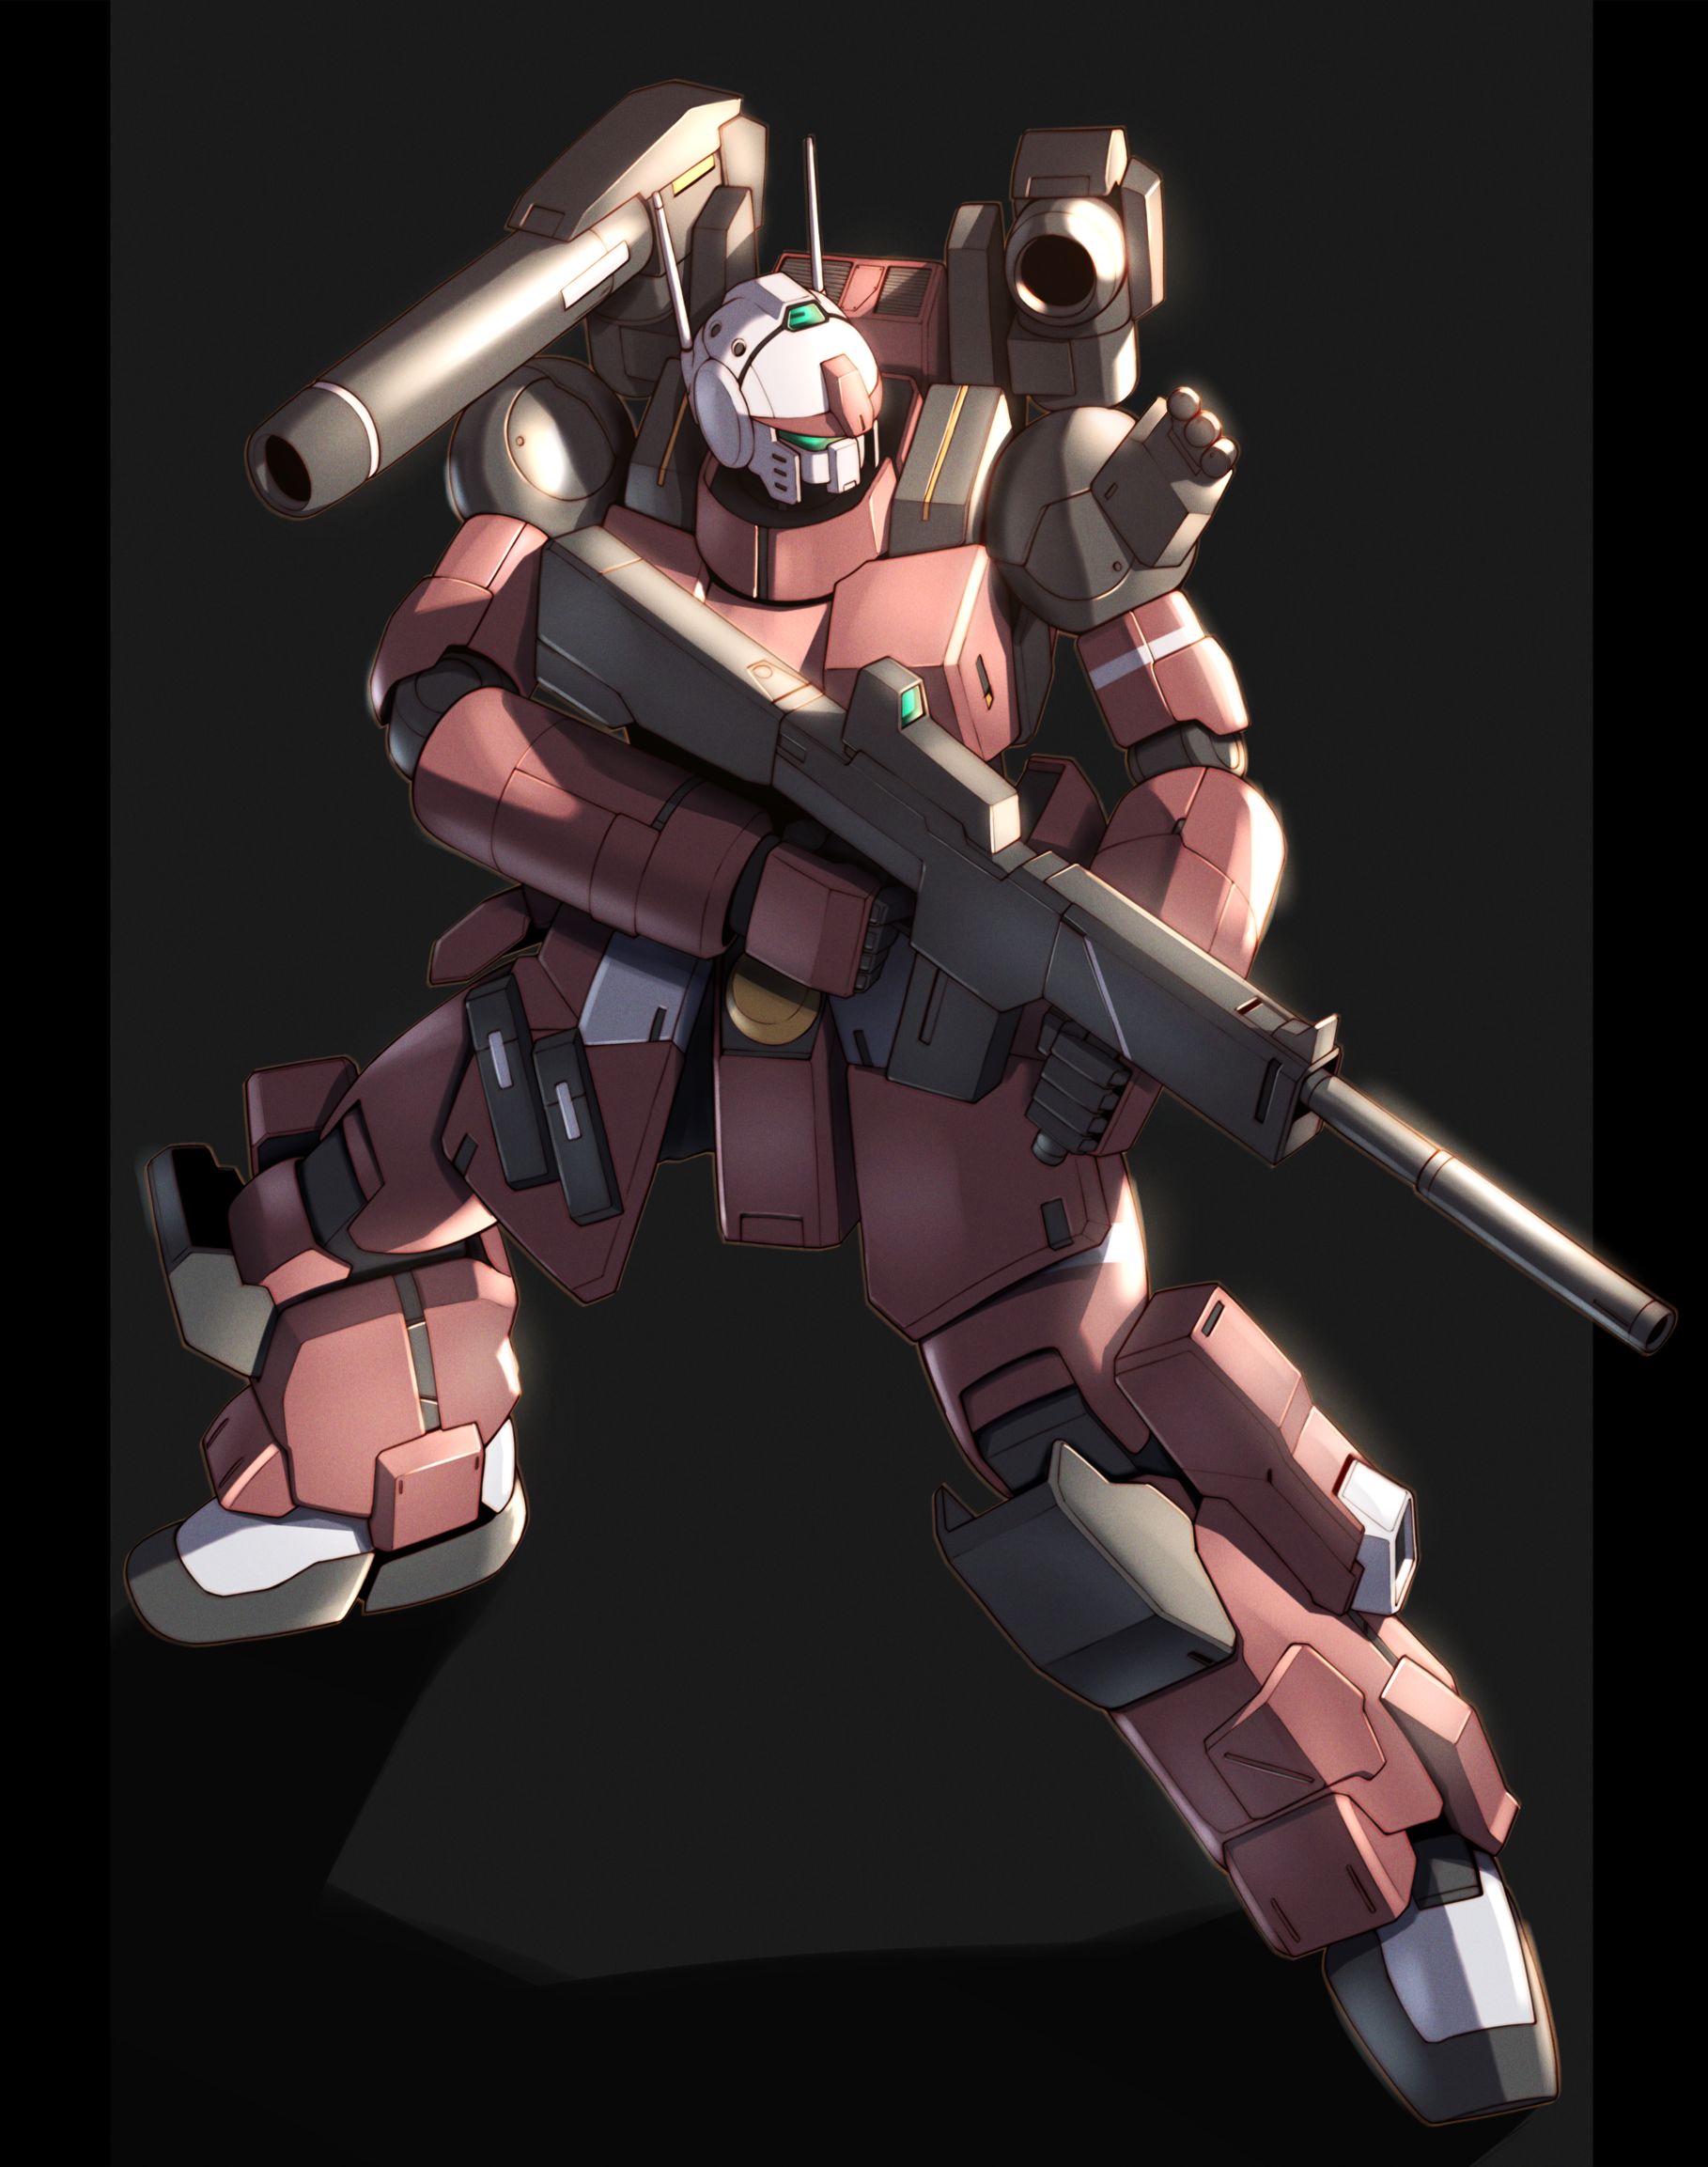 Anime 1818x2306 Guncannon Mobile Suit Gundam Mobile Suit artwork digital art fan art mechs Super Robot Taisen